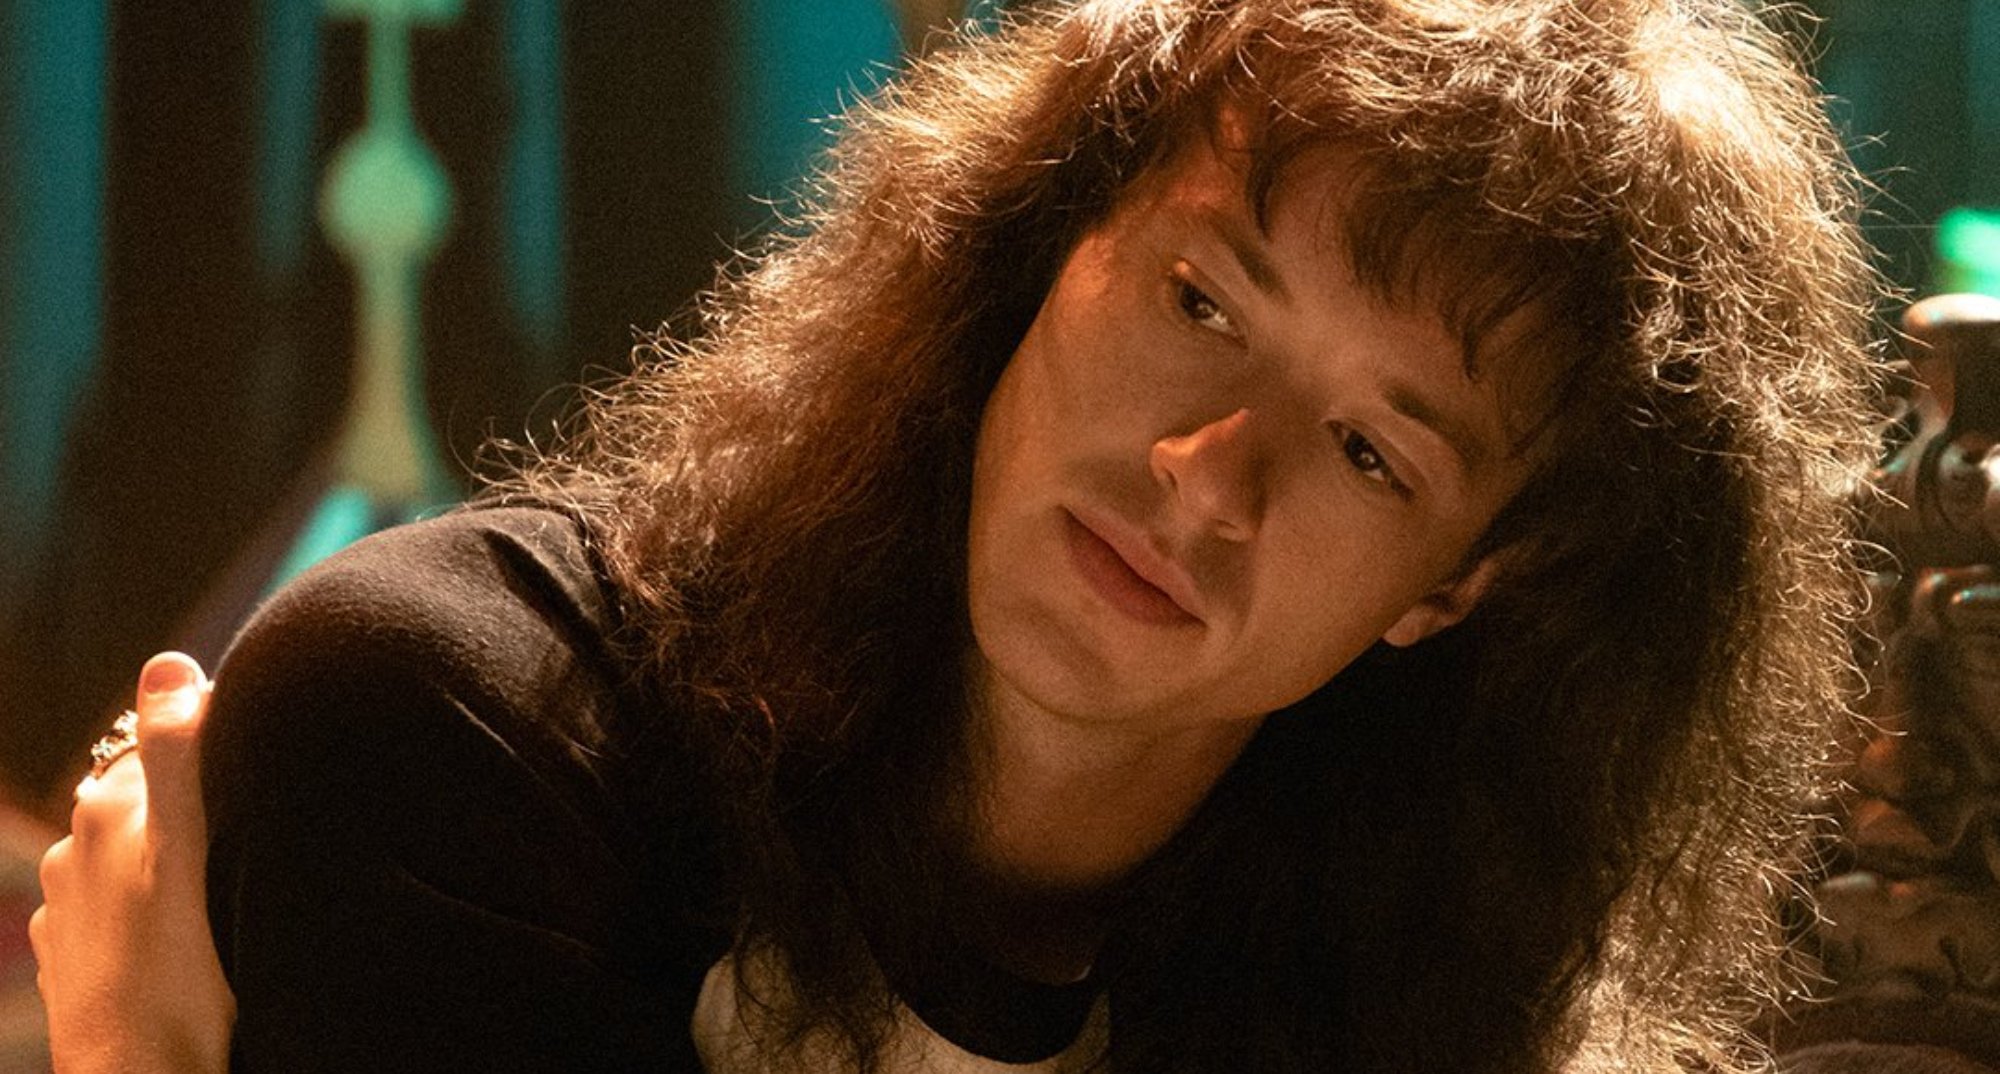 Actor Joseph Quinn as metalhead Eddie Munson in 'Stranger Things' Season 4 wearing Hellfire shirt.